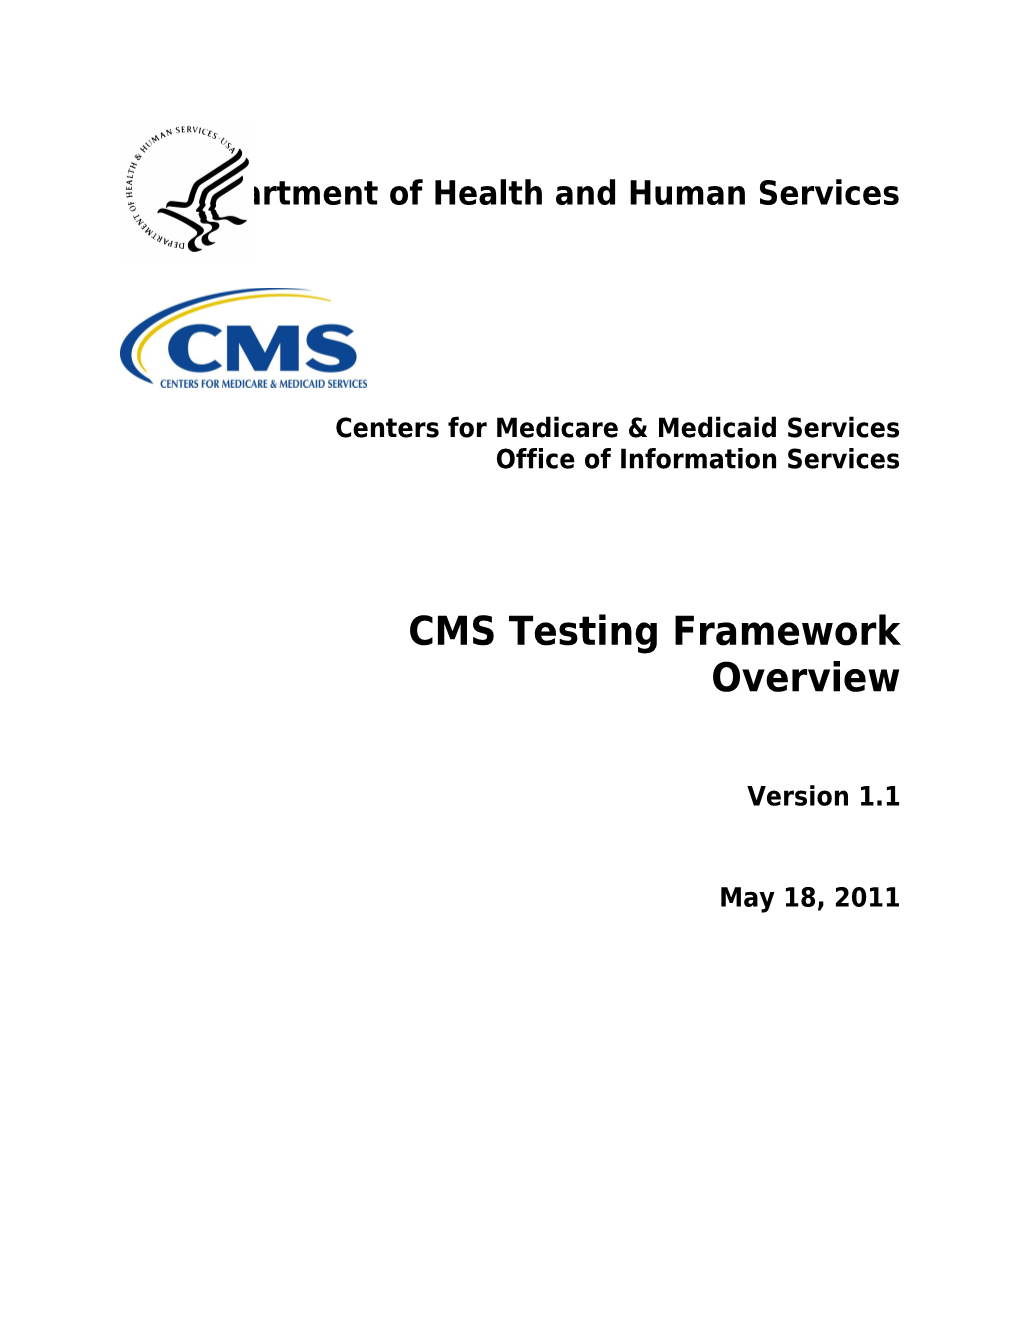 CMS Testing Framework Overview